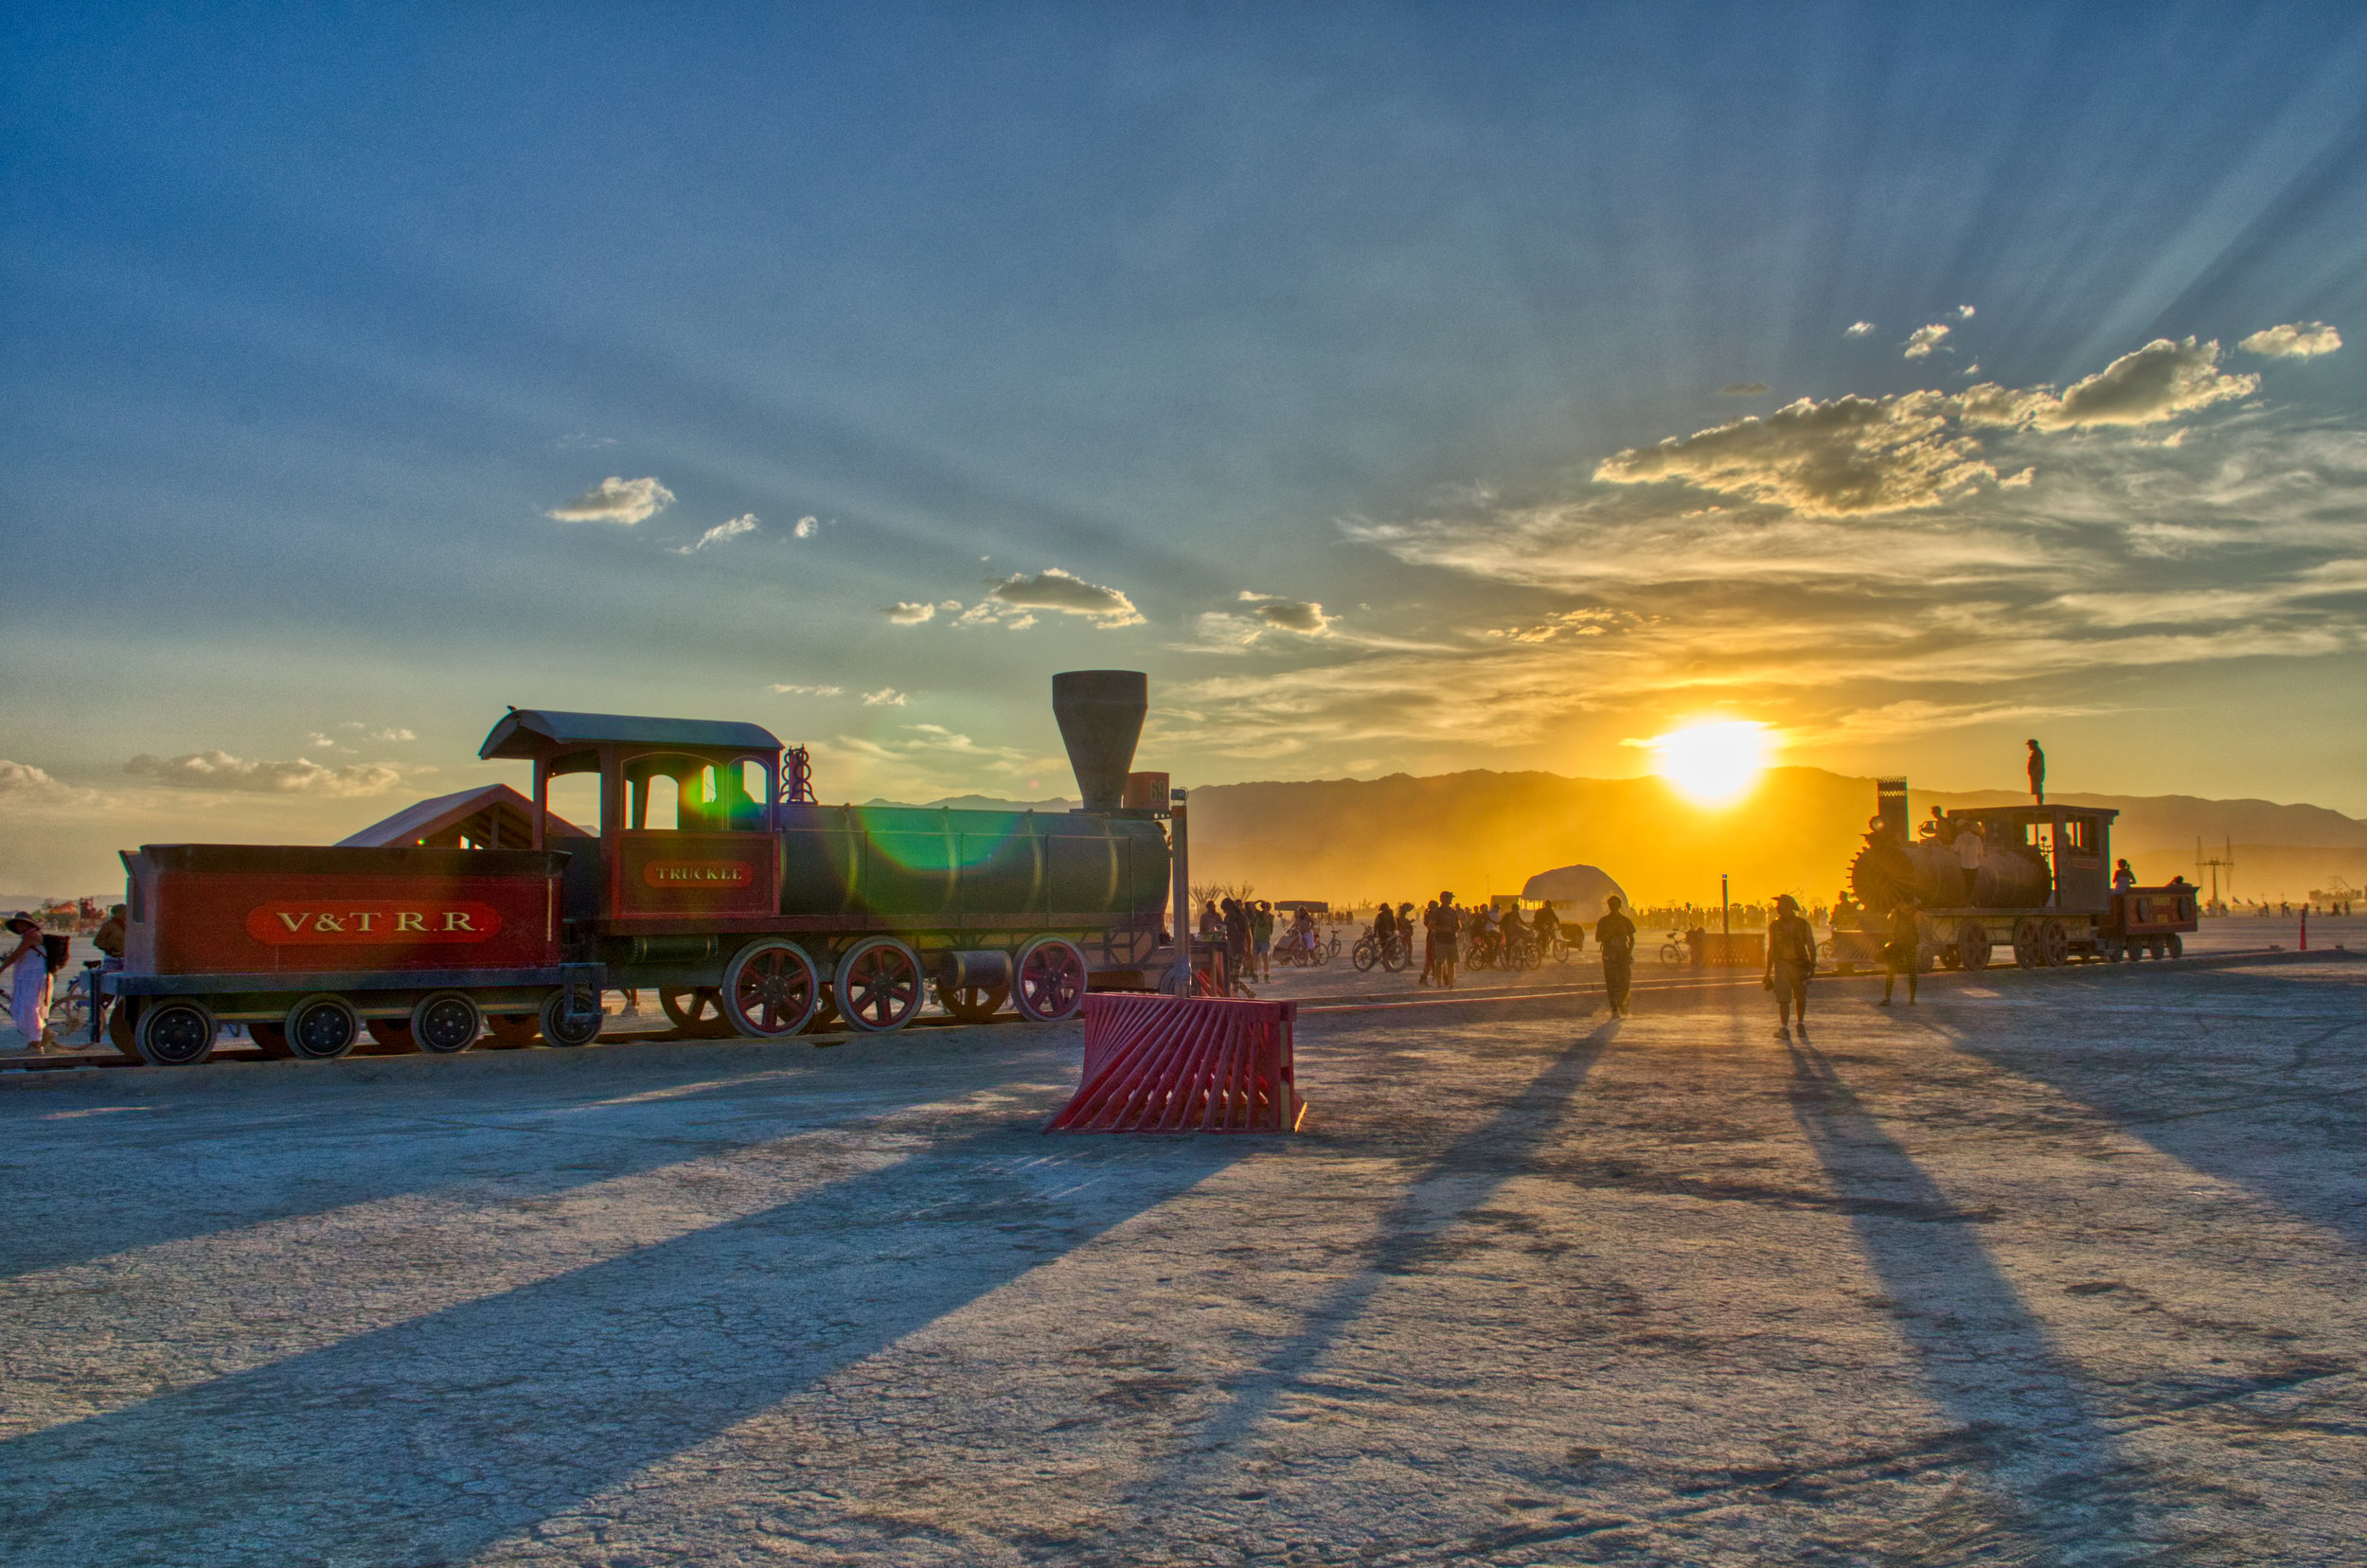 Burning Man 2018 - The Great Train Wreck